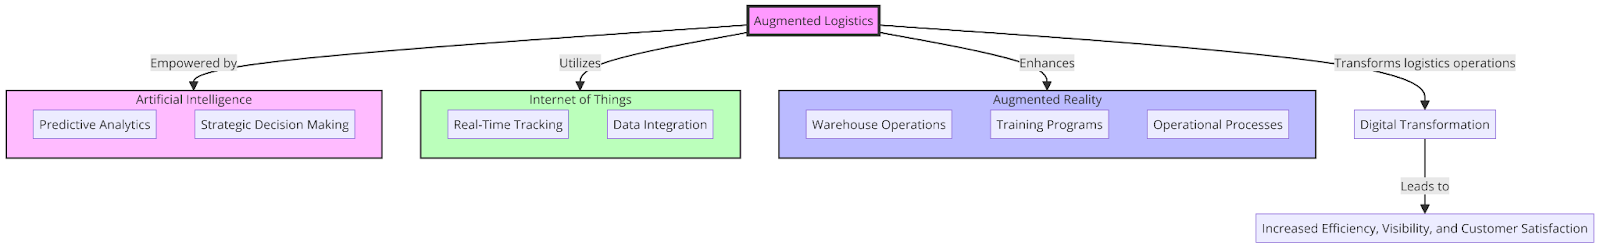 Augmented Logistics_ A Digital Transformation